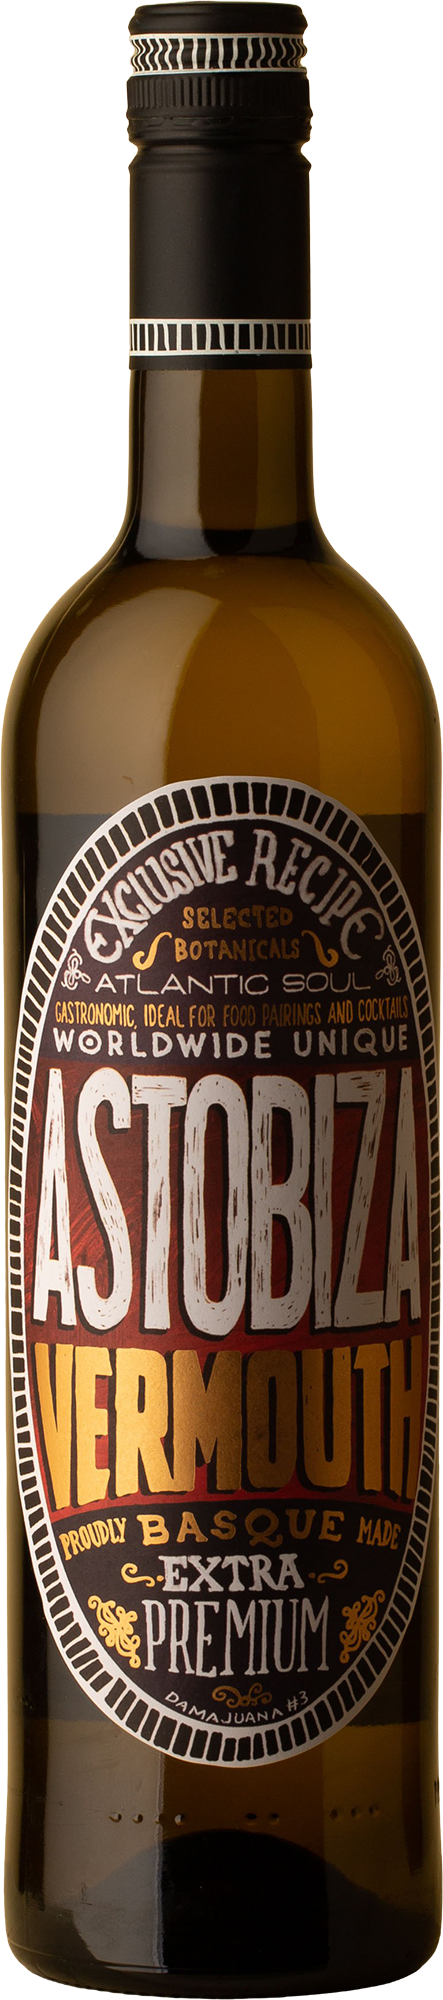 Astobiza - Bianco 750mL + Rosso 50mL Vermouth Not Wine